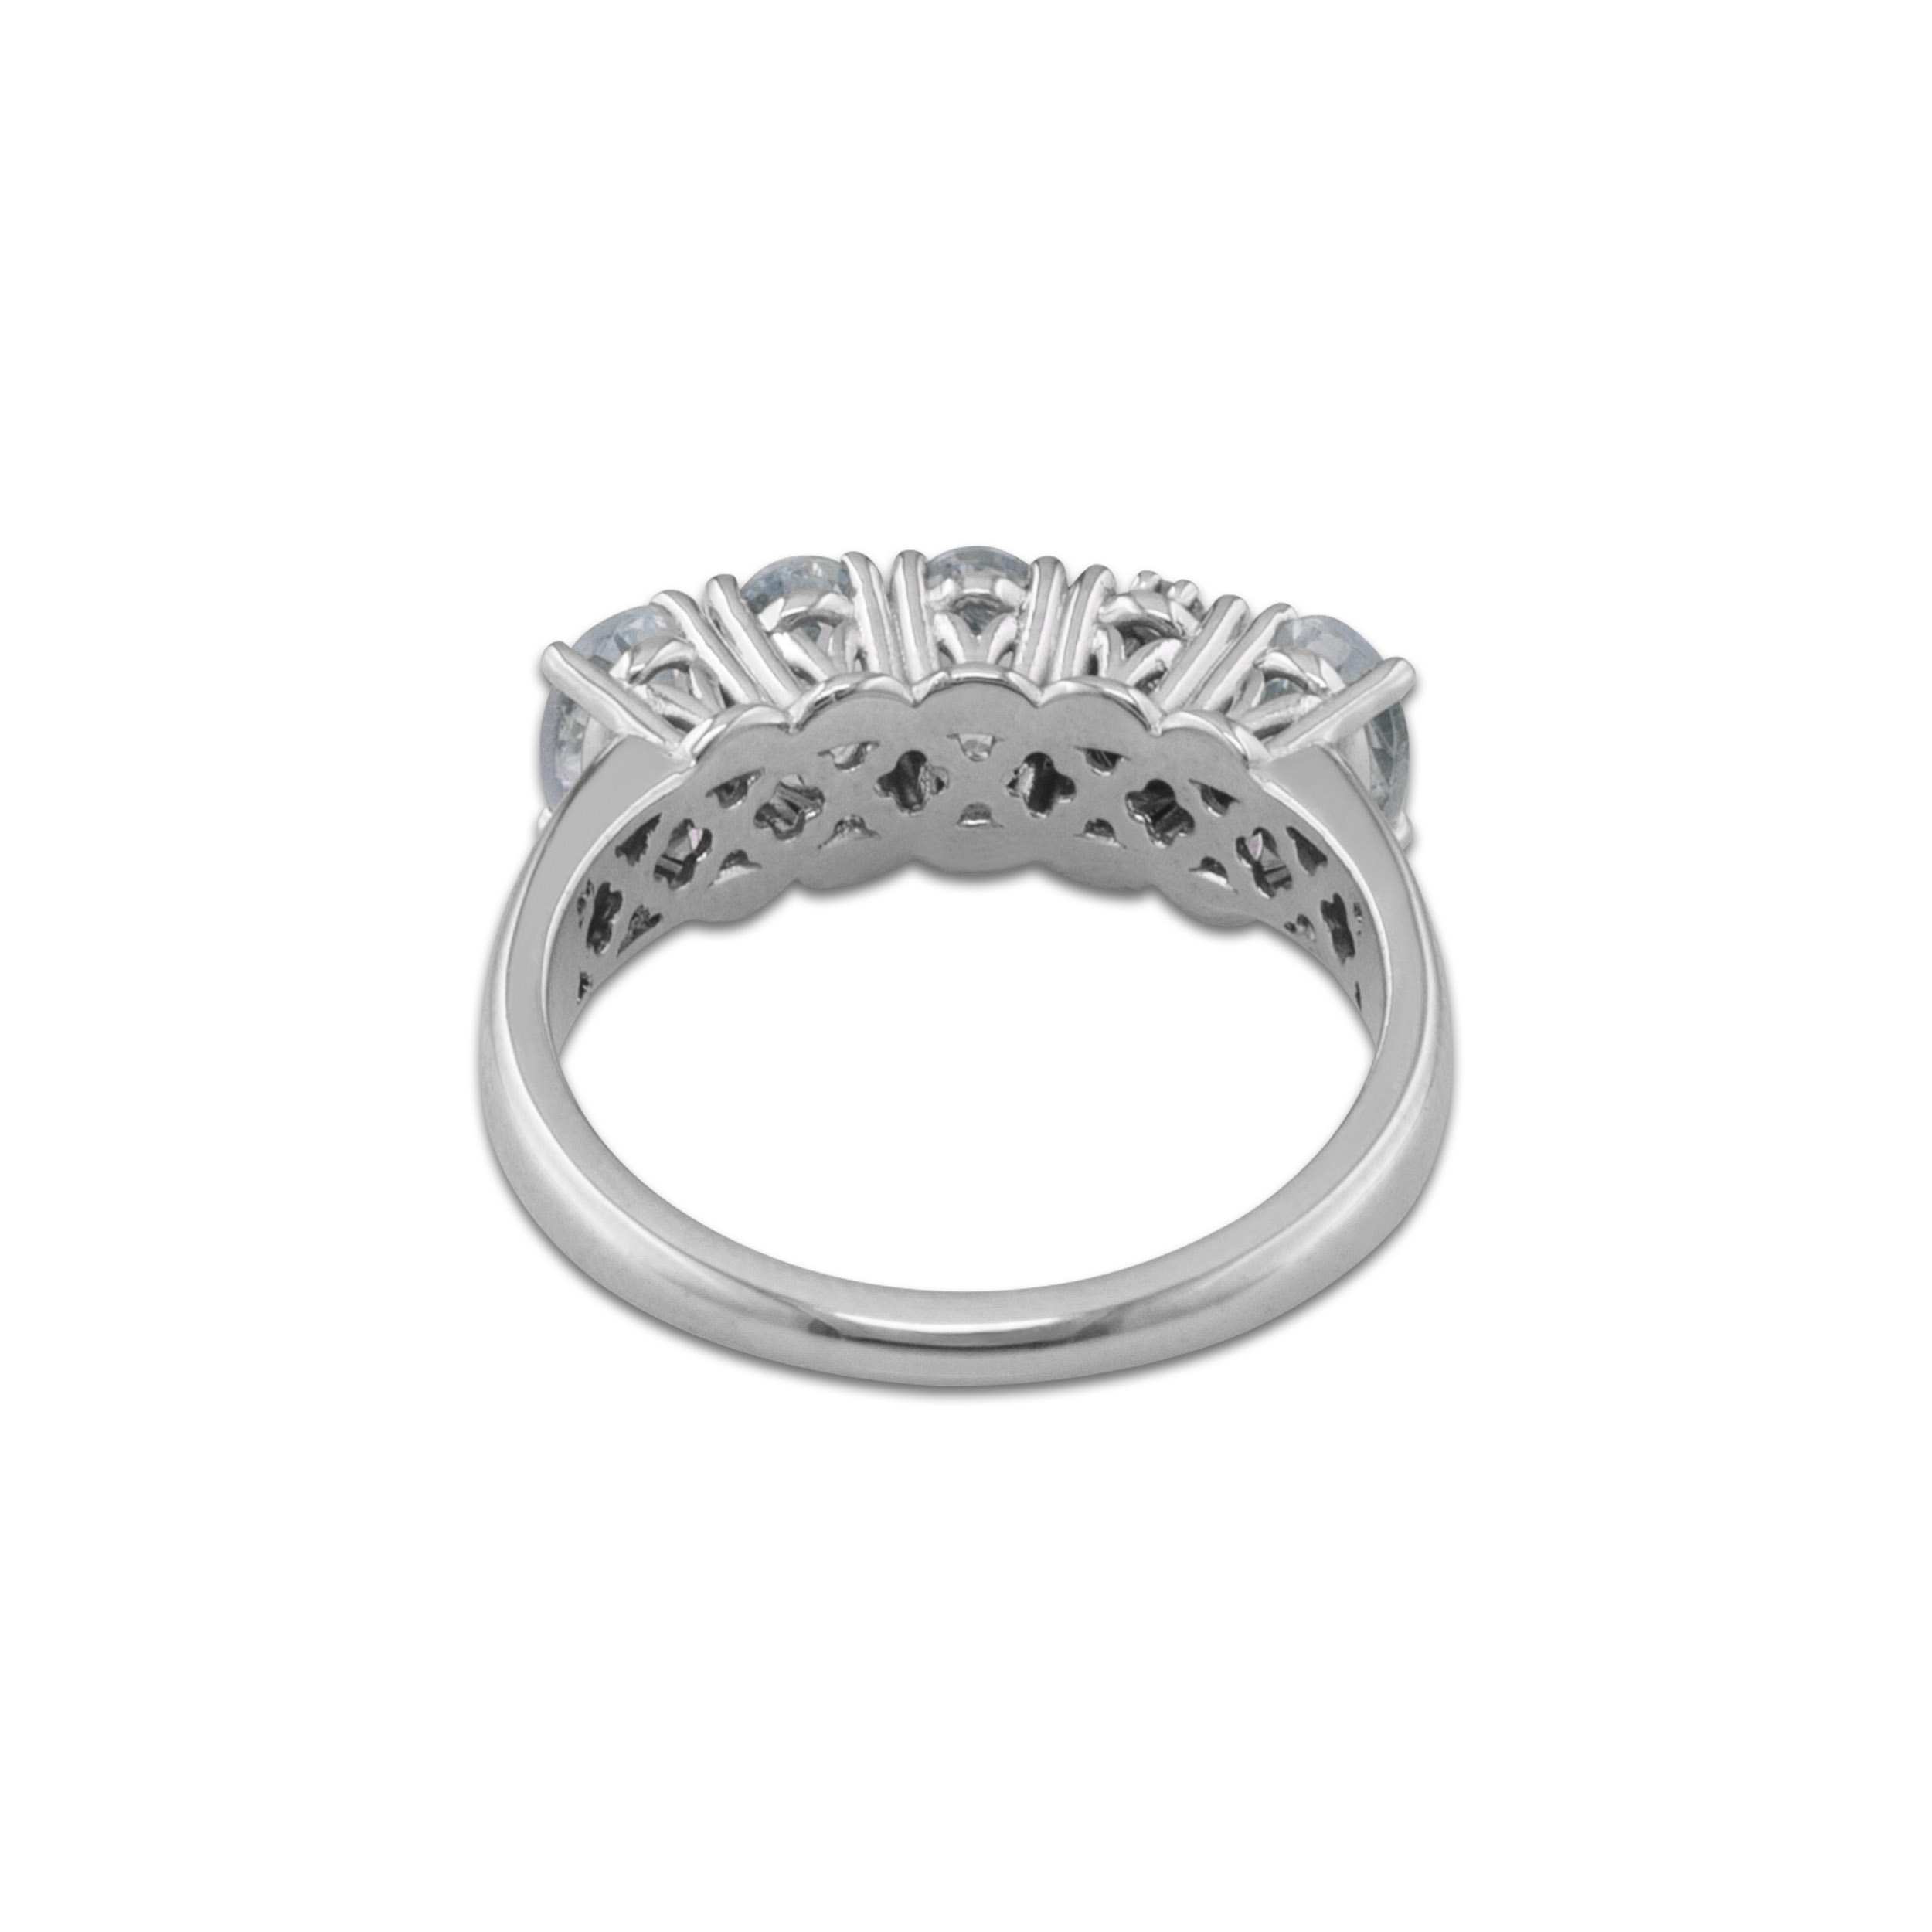 k18 white gold ring with aquamarines and diamonds